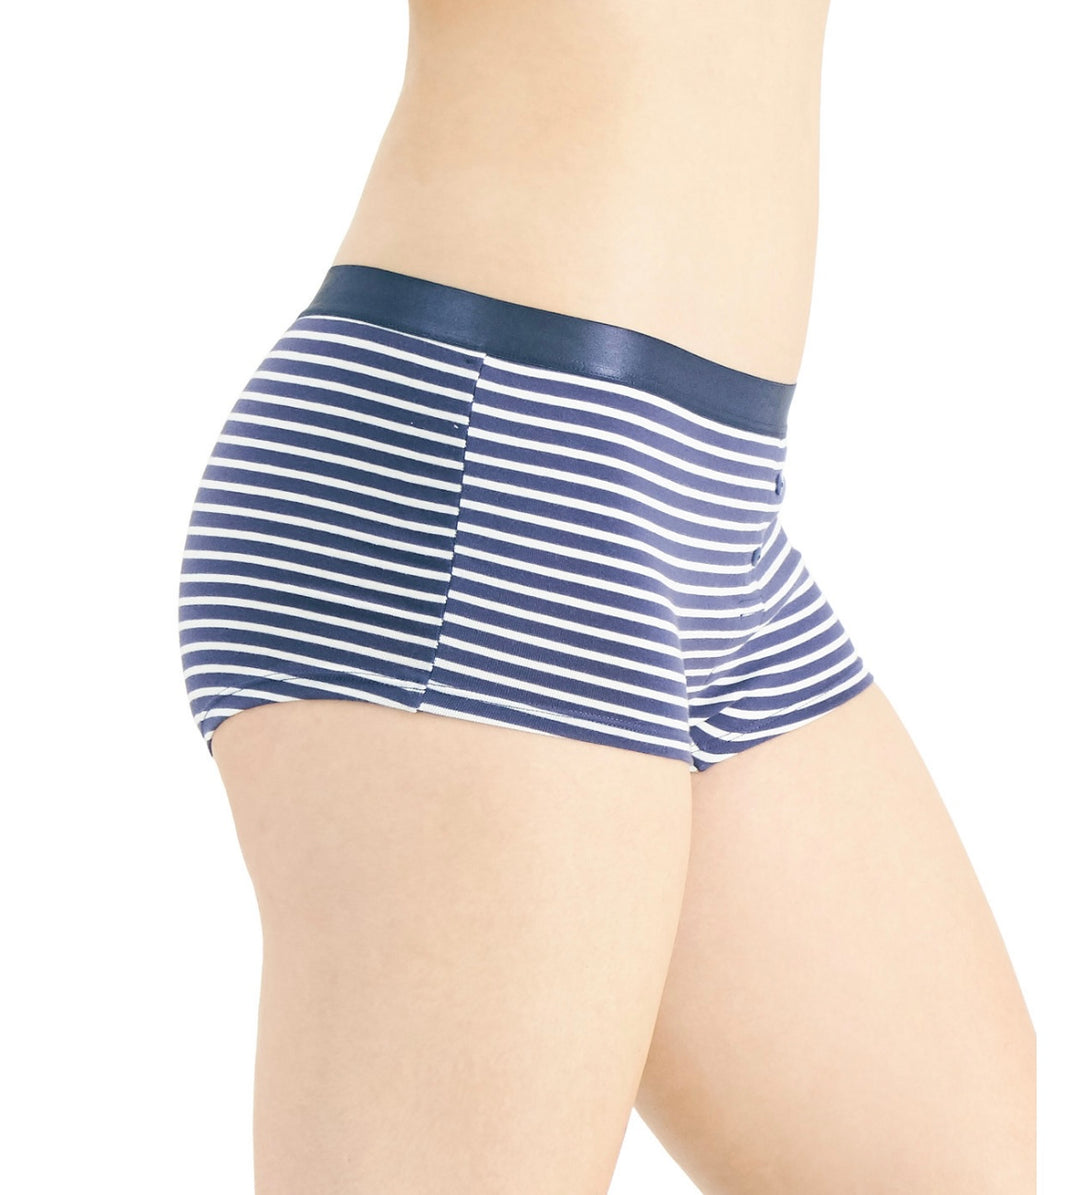 Jenni Women's Faux button fly Boyshorts Underwear Stripe Size XL